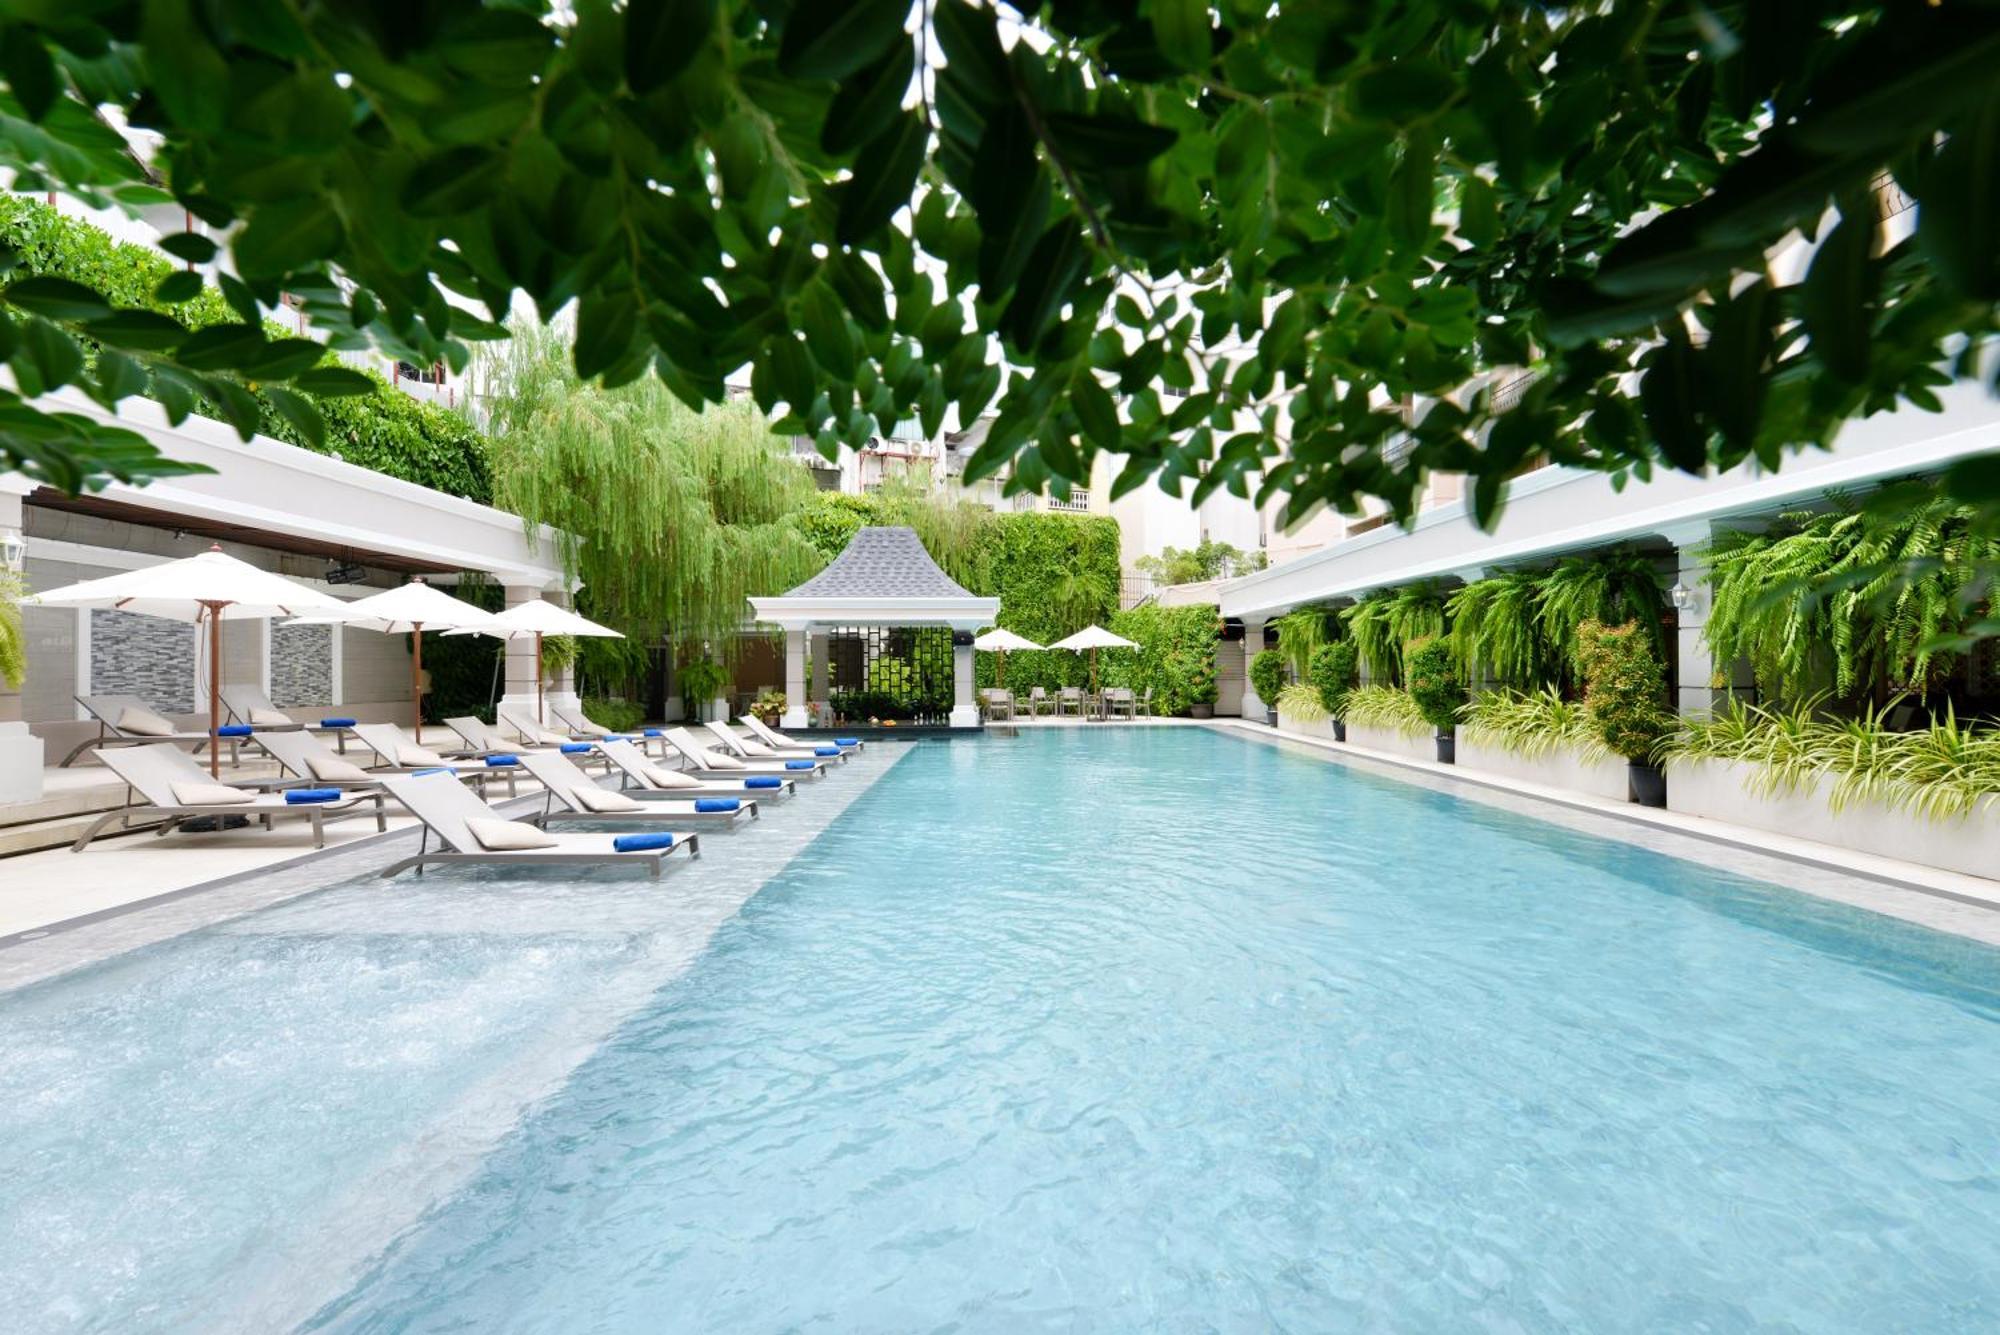 The Beverly Hotel Pattaya Exterior photo